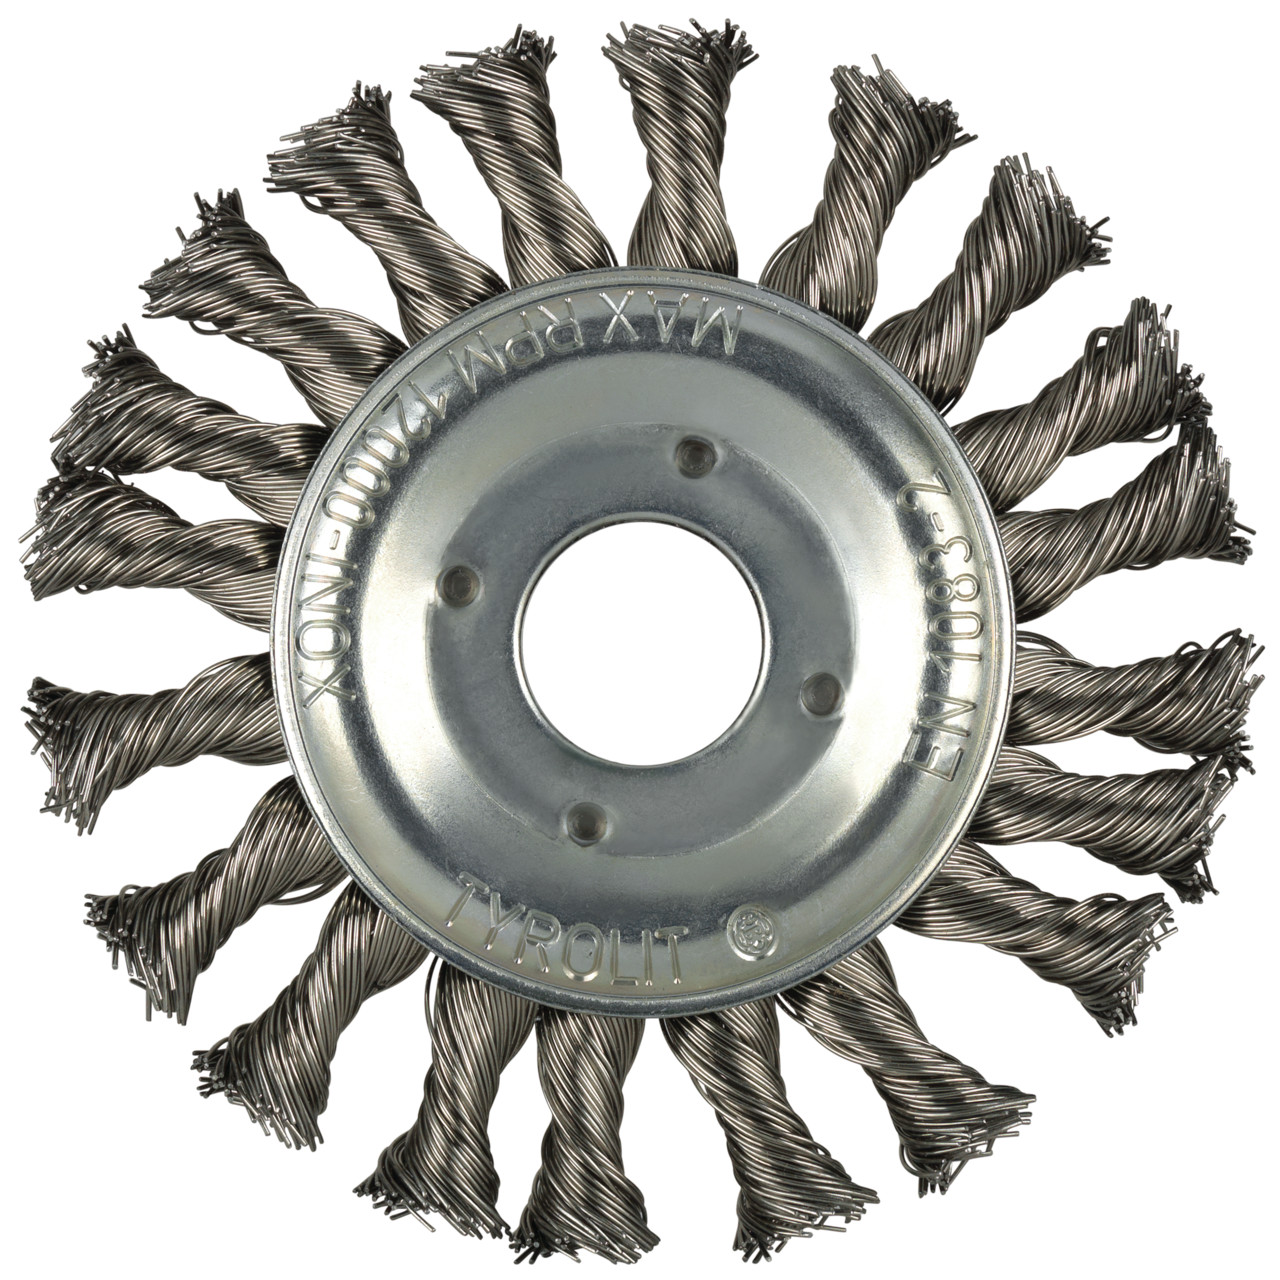 Spazzole rotonde Tyrolit DxLxH 125x12x25x22.2 Per acciaio inox, forma: 1RDZ - (spazzola rotonda), Art. 890635